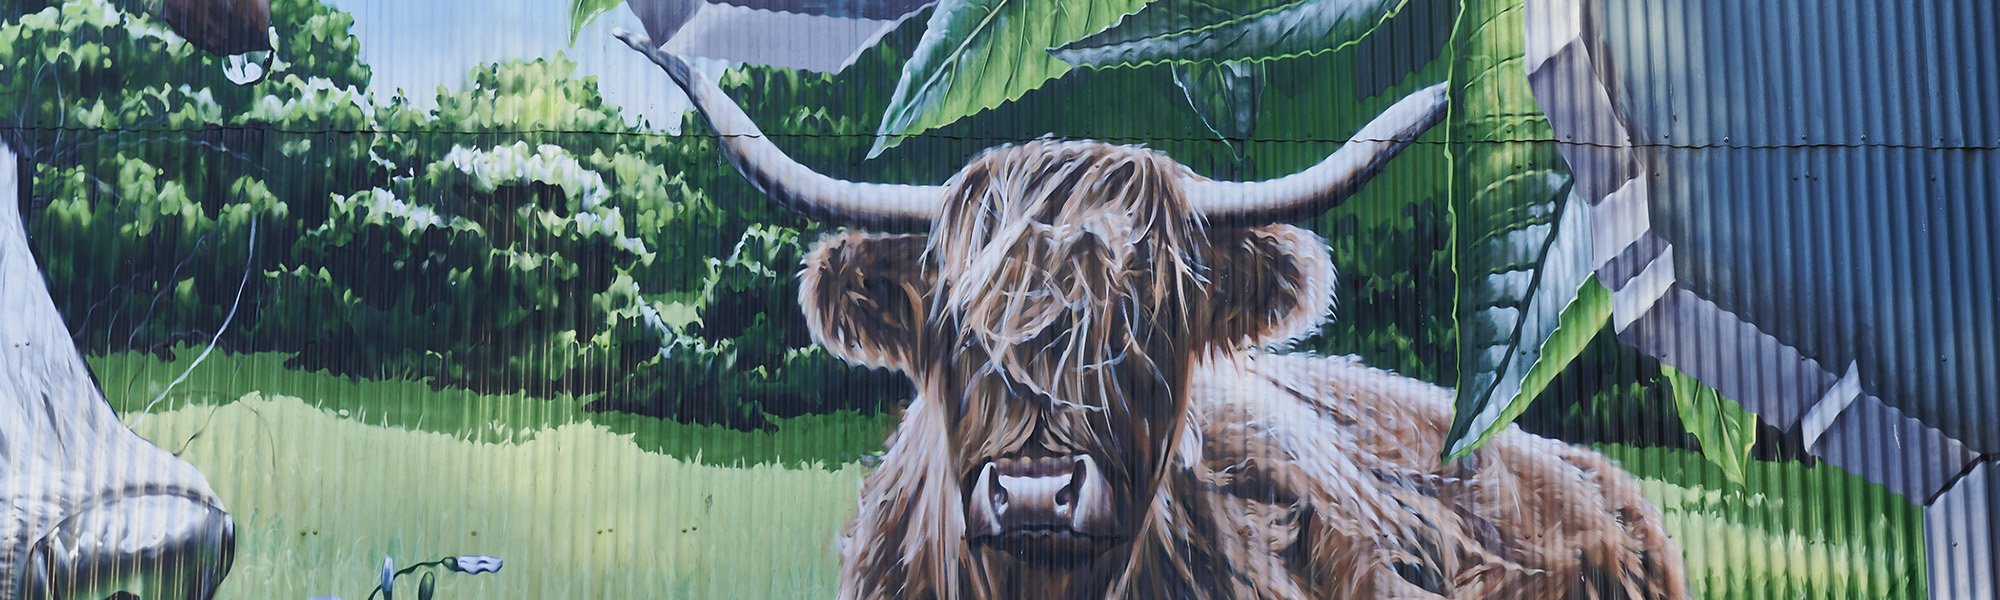 Ingram Street mural of a highland cow